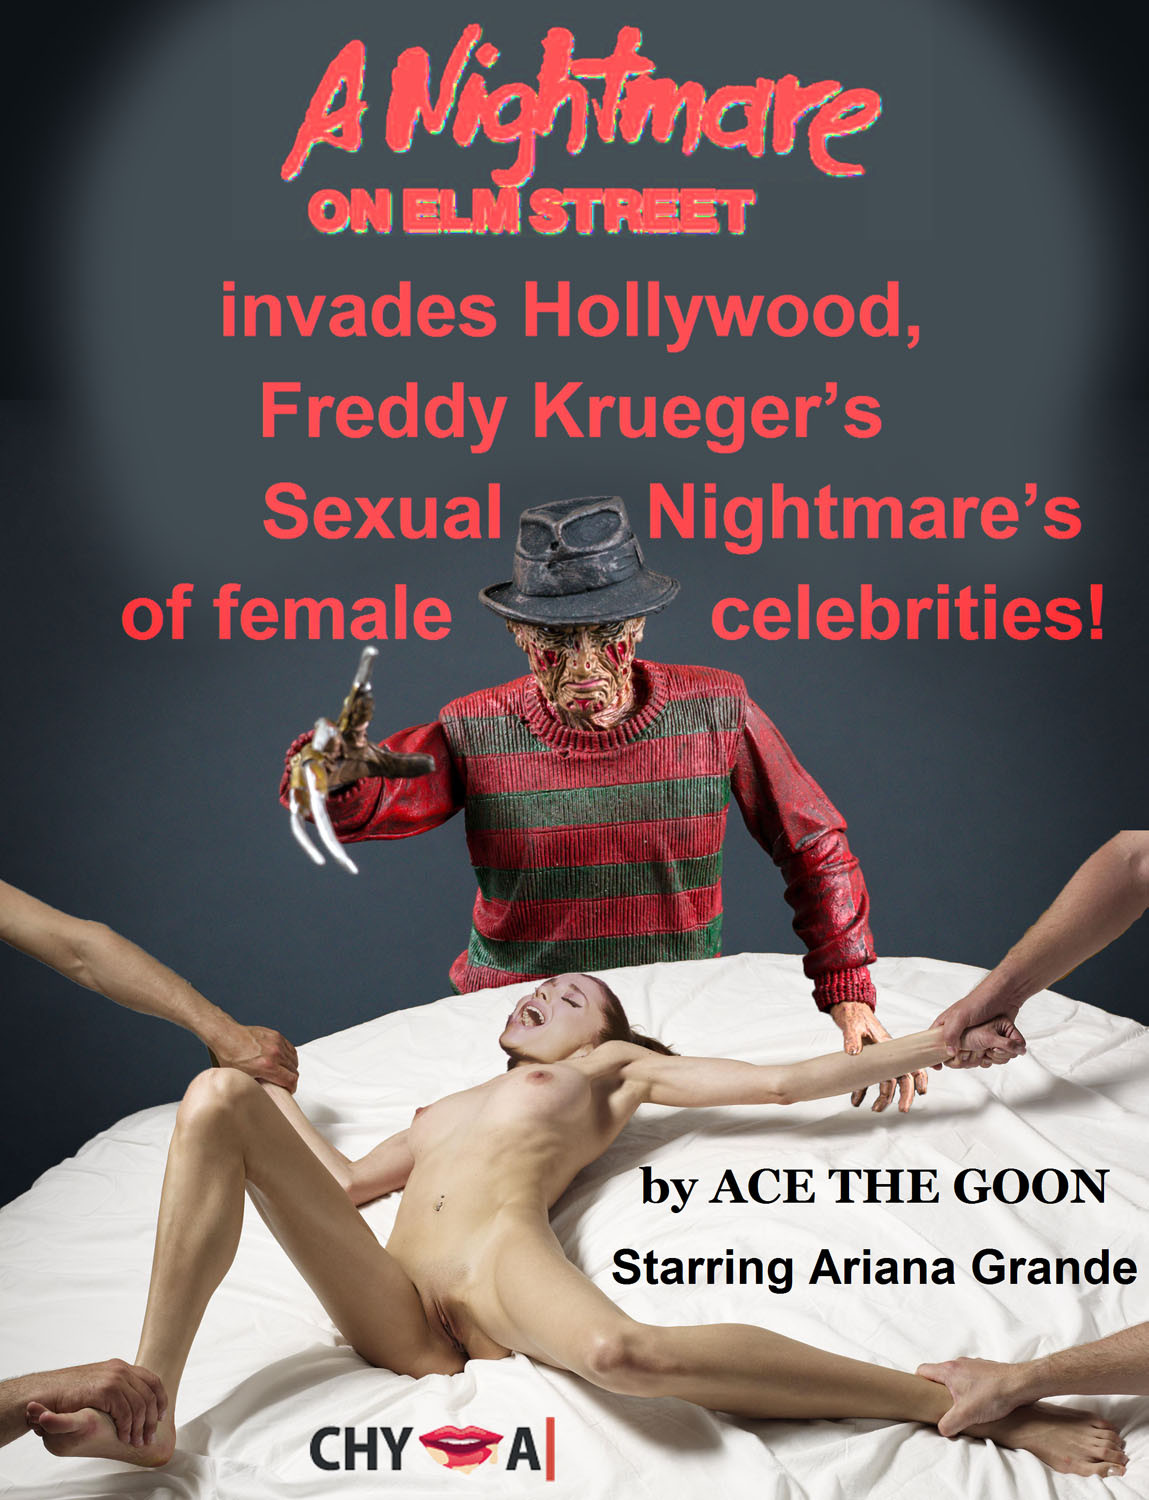 “A Nightmare on Elm Street invades Hollywood, Freddy Krueger’s Sexual Nightmare’s of female celebrities!”